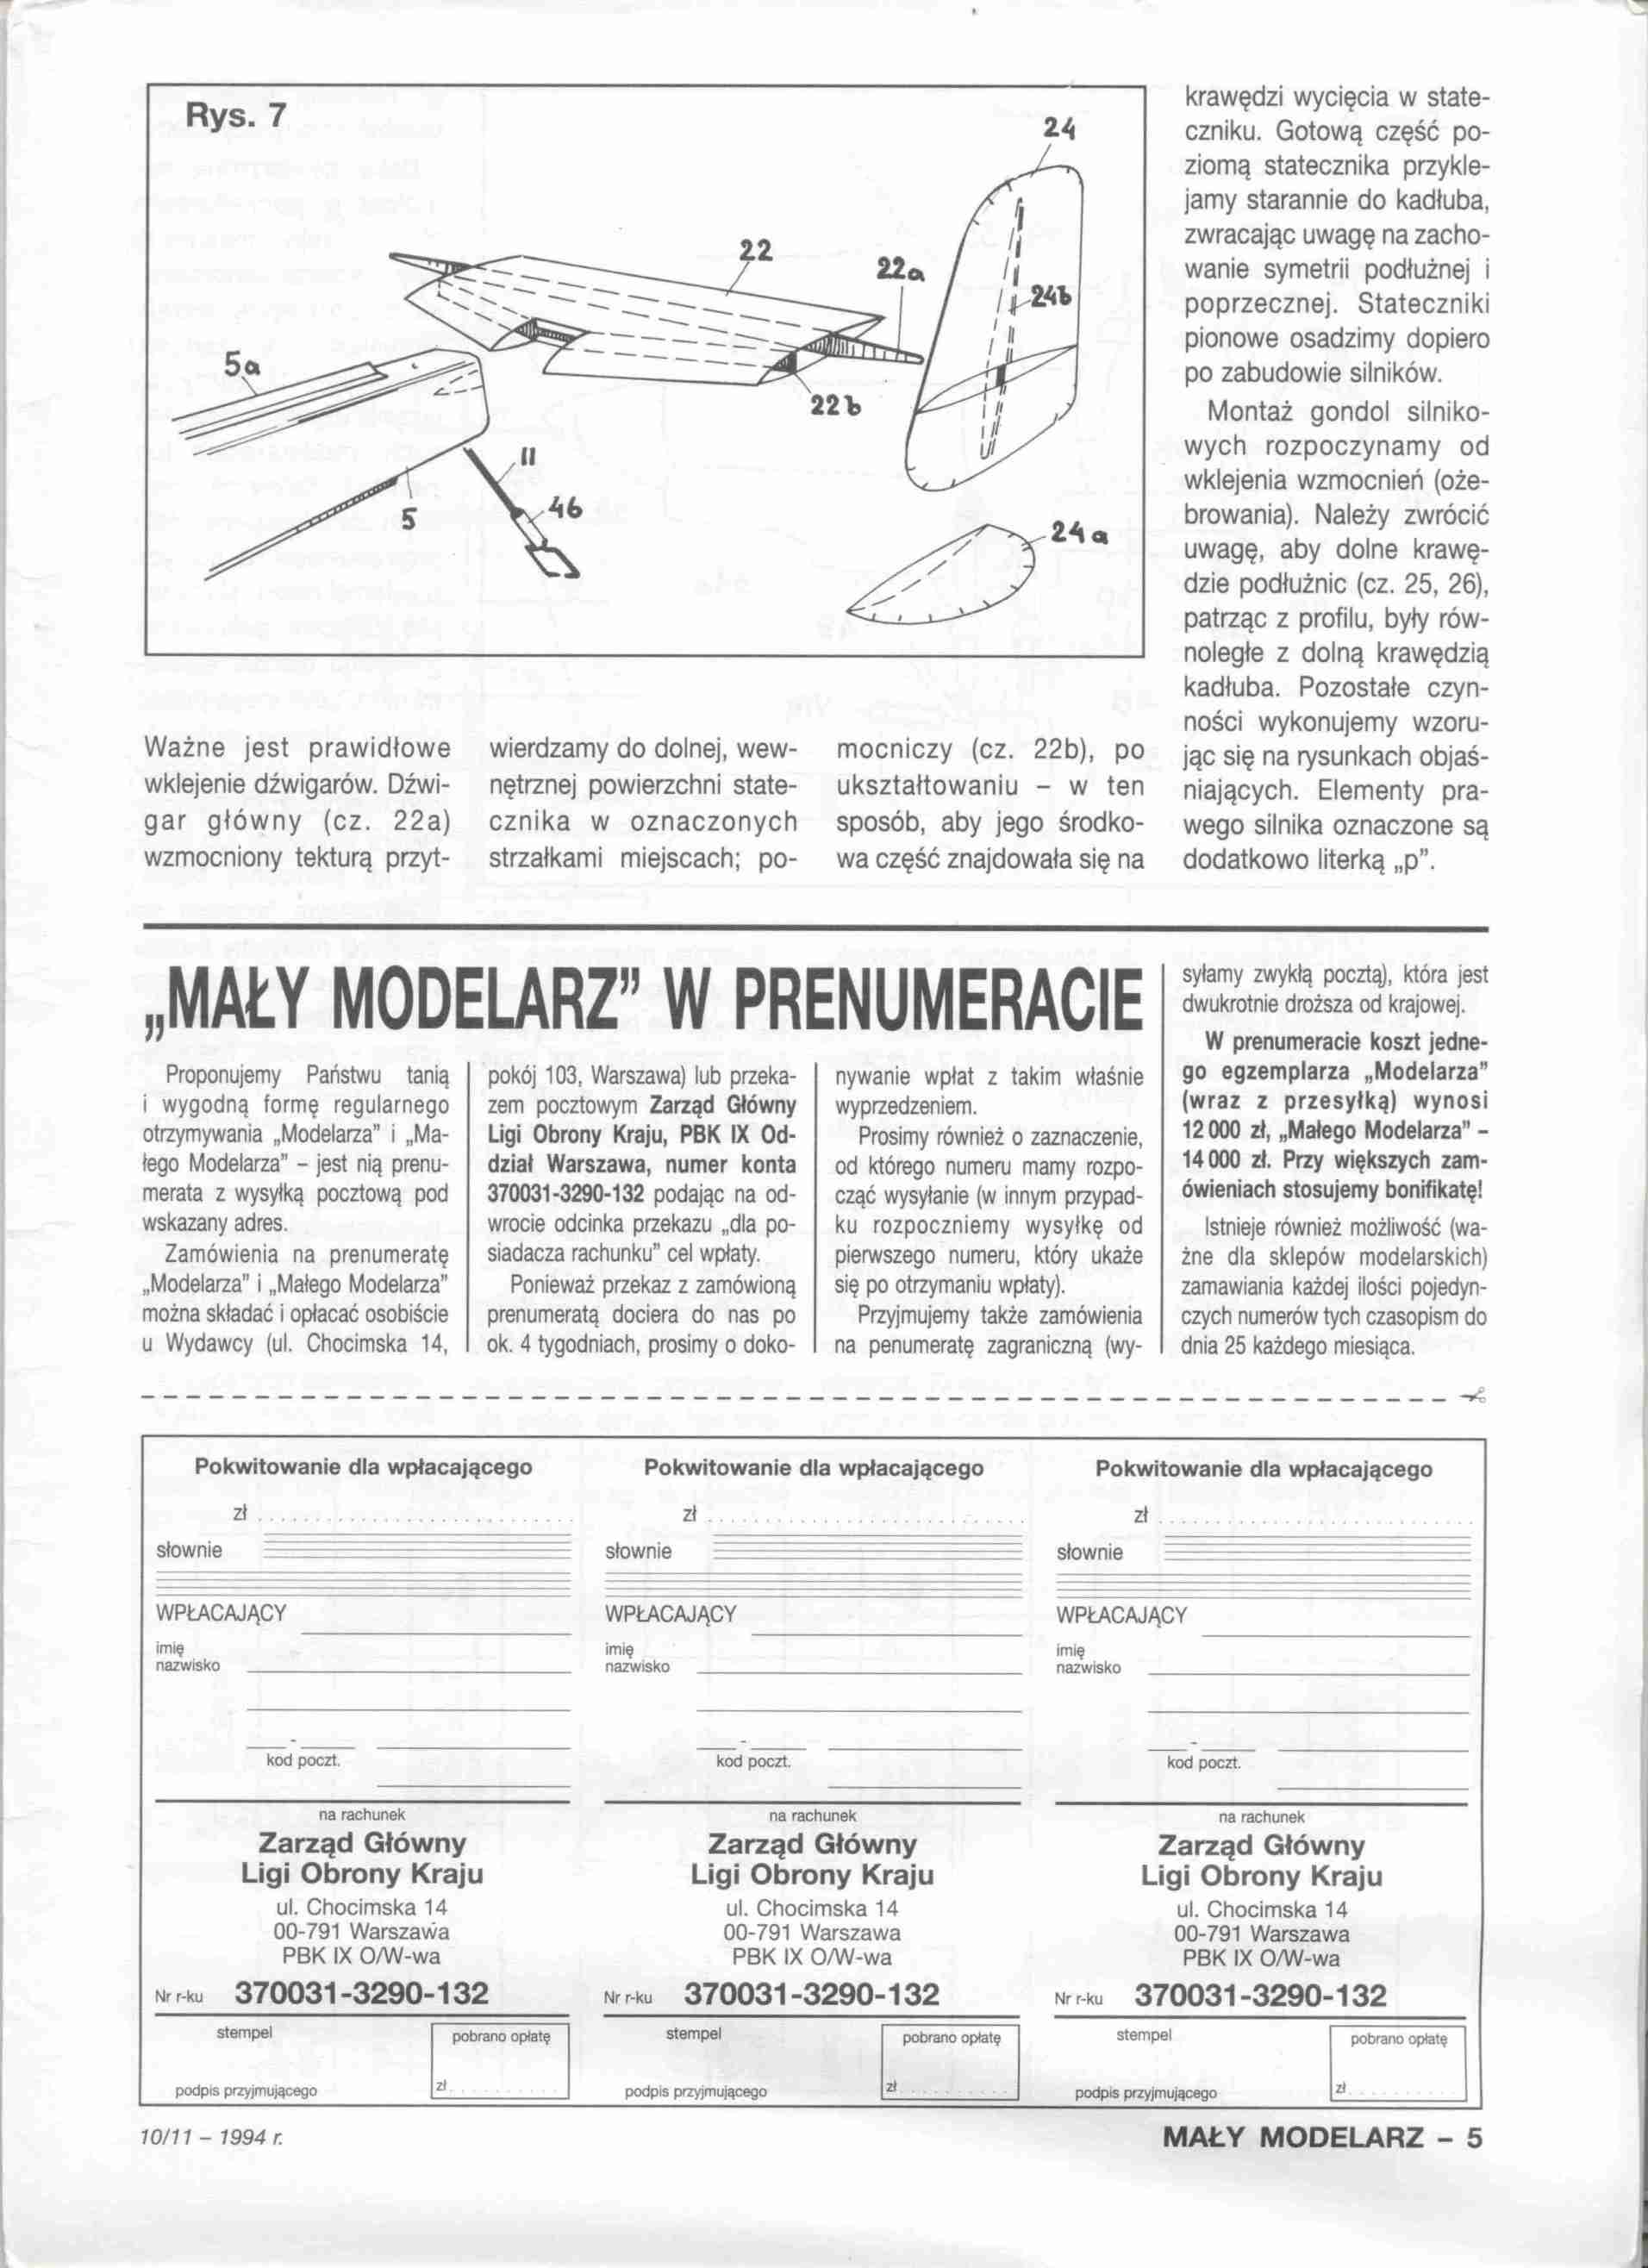 "Maly Modelarz" 10-11, 1994 5 с.